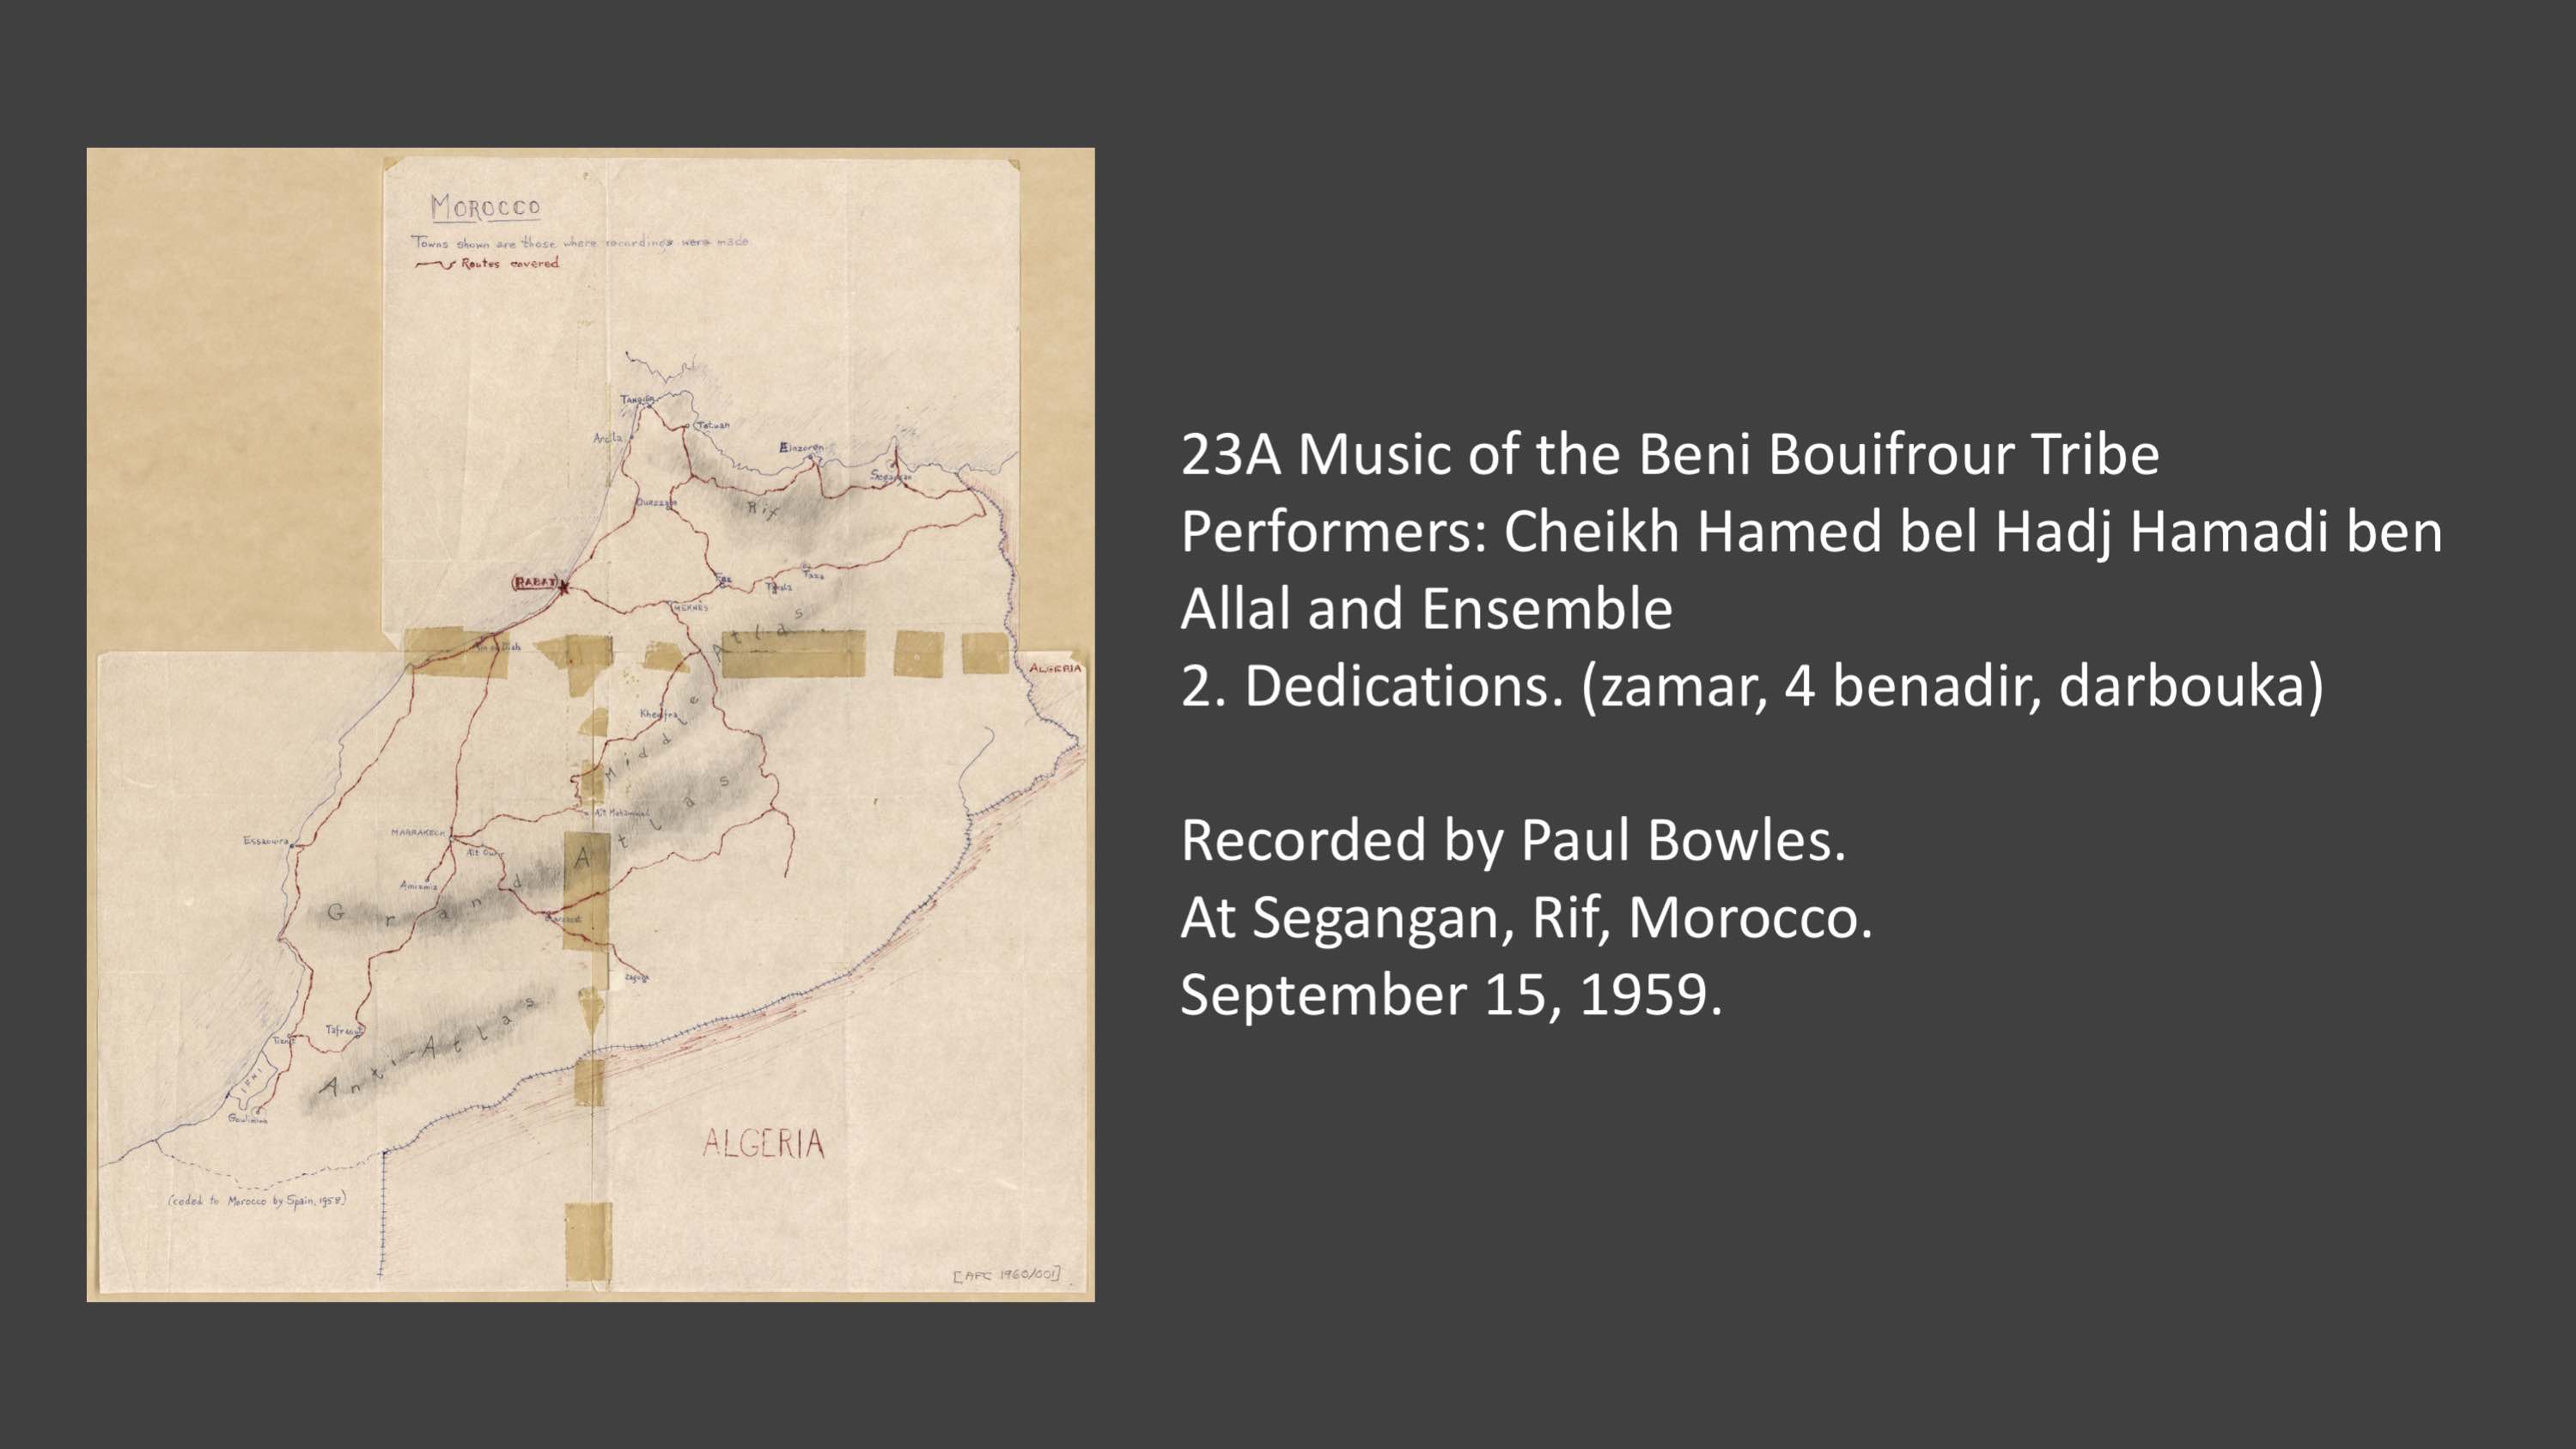 23A 2. Dedications (zamar, 4 benadir, darbouka)
Music of the Beni Bouifrour Tribe
Performers: Cheikh Hamed bel Hadj Hamadi ben Allal and Ensemble
Recorded by Paul Bowles at Segangan, Rif, Morocco. September 15, 1959.